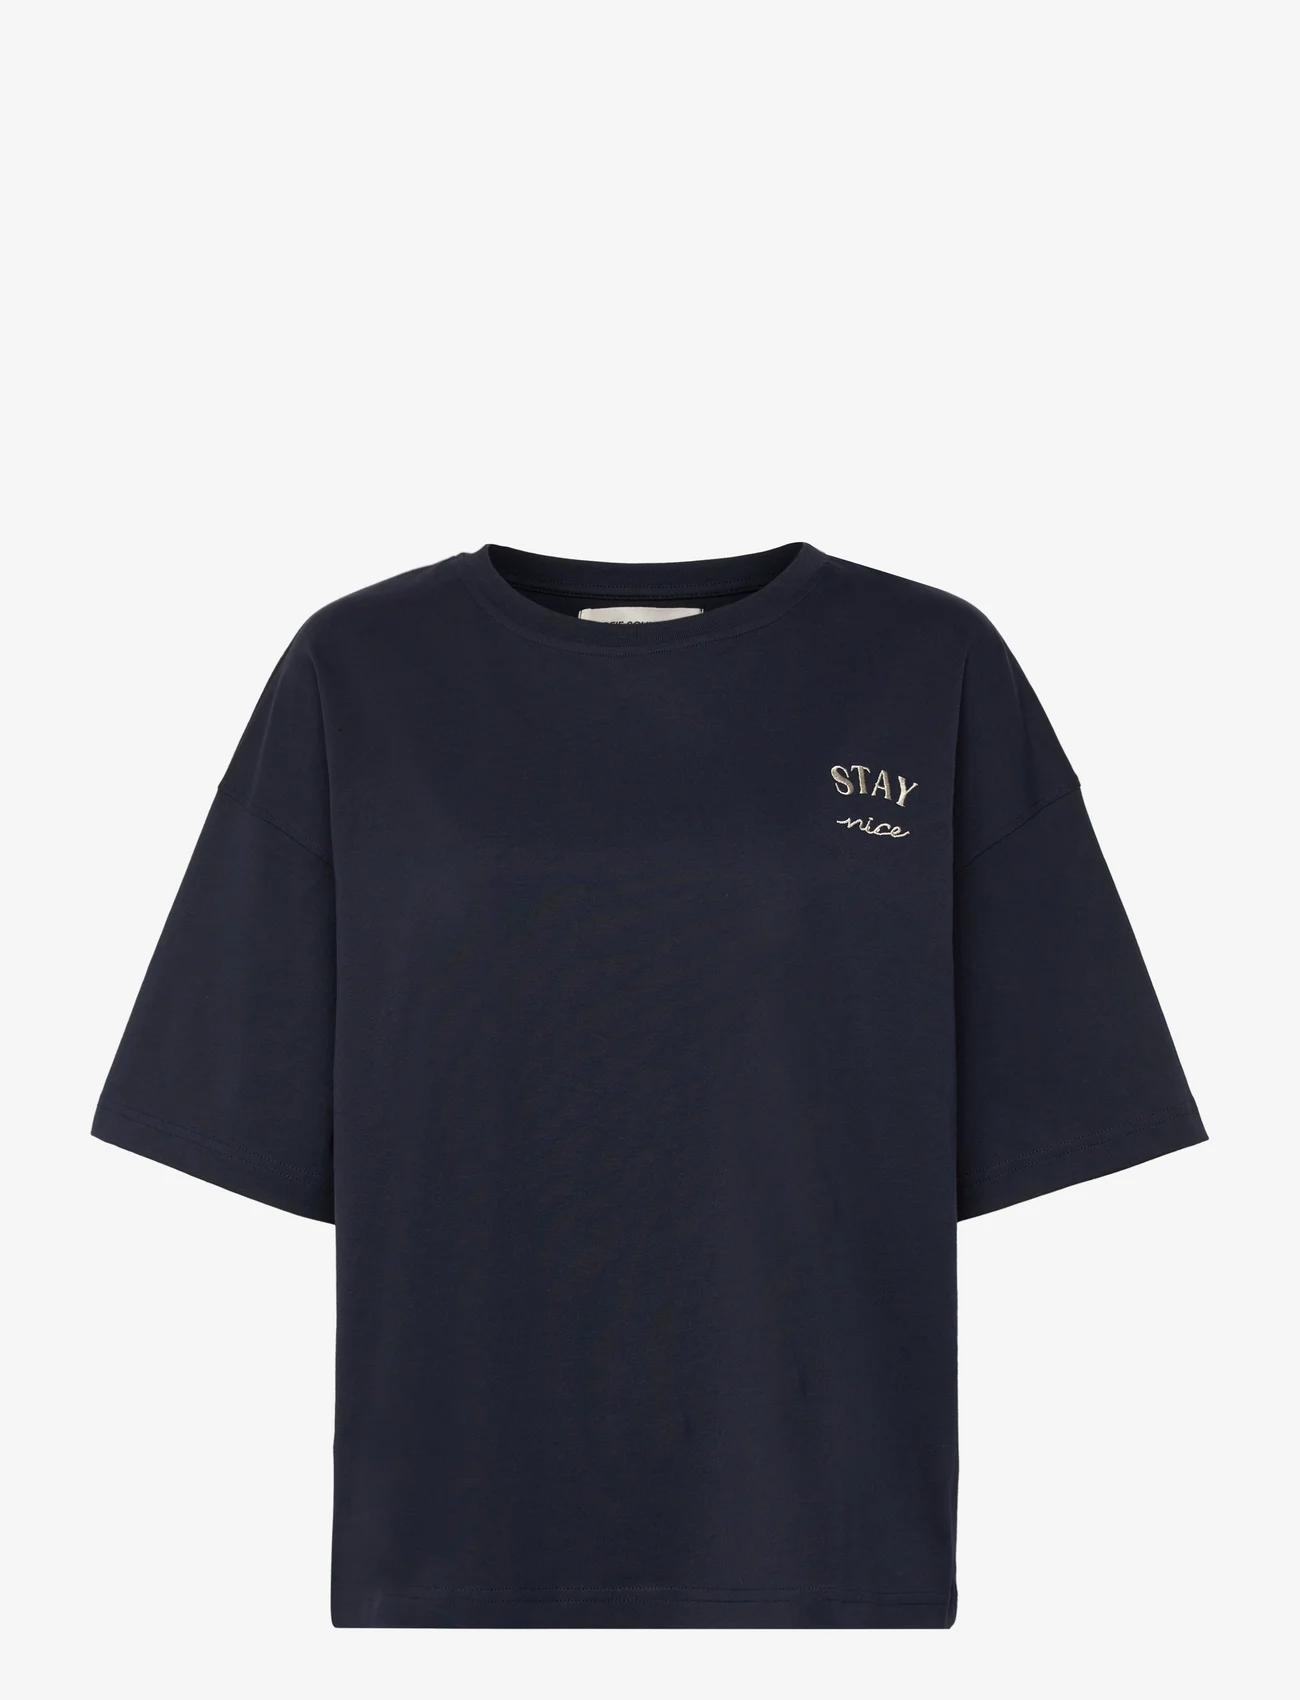 Sofie Schnoor - T-shirt - t-shirts - navy - 0